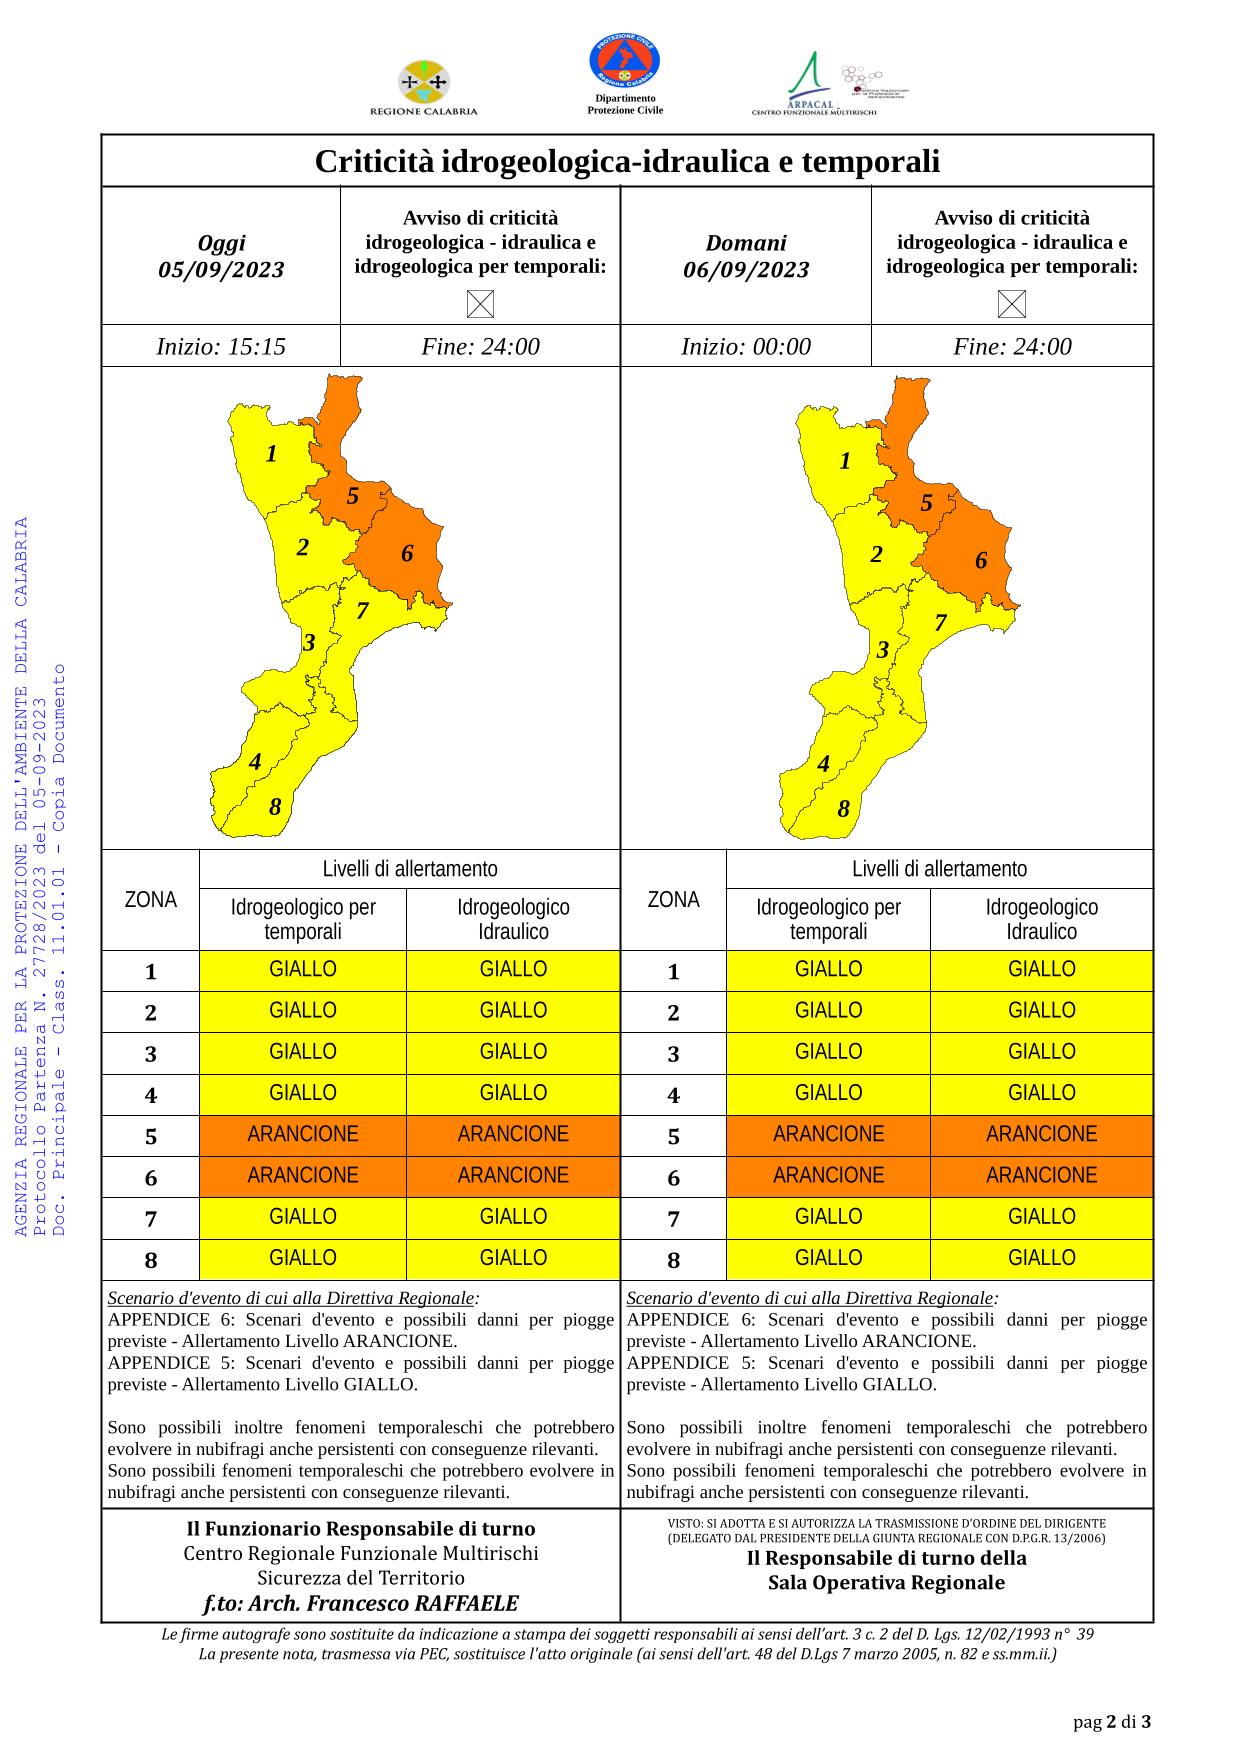 Criticità idrogeologica-idraulica e temporali in Calabria 05-09-2023